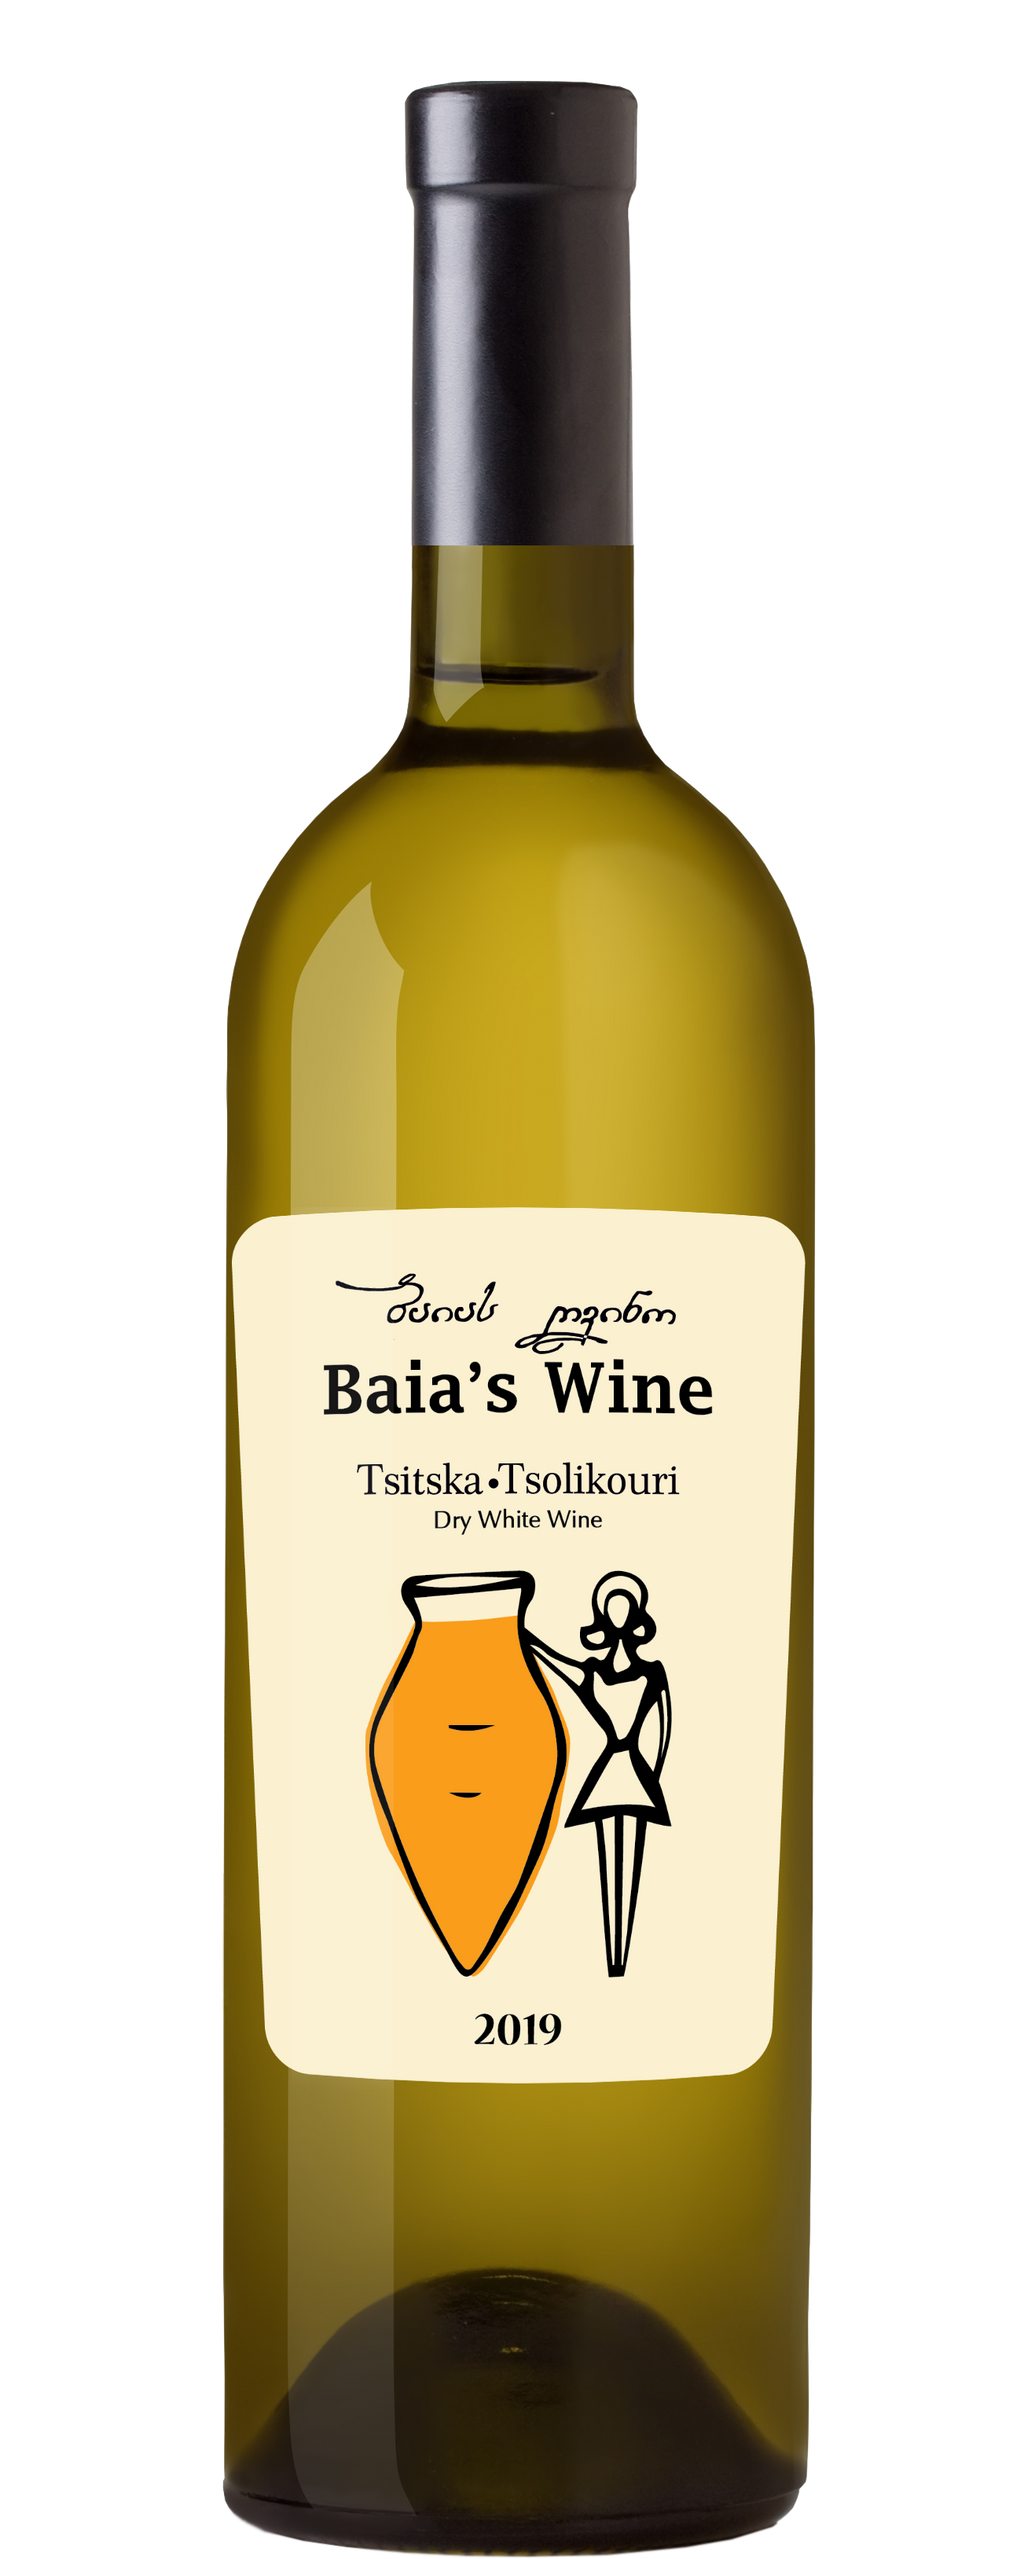 Baia's wine, Tsitska Tsolikouri 2019